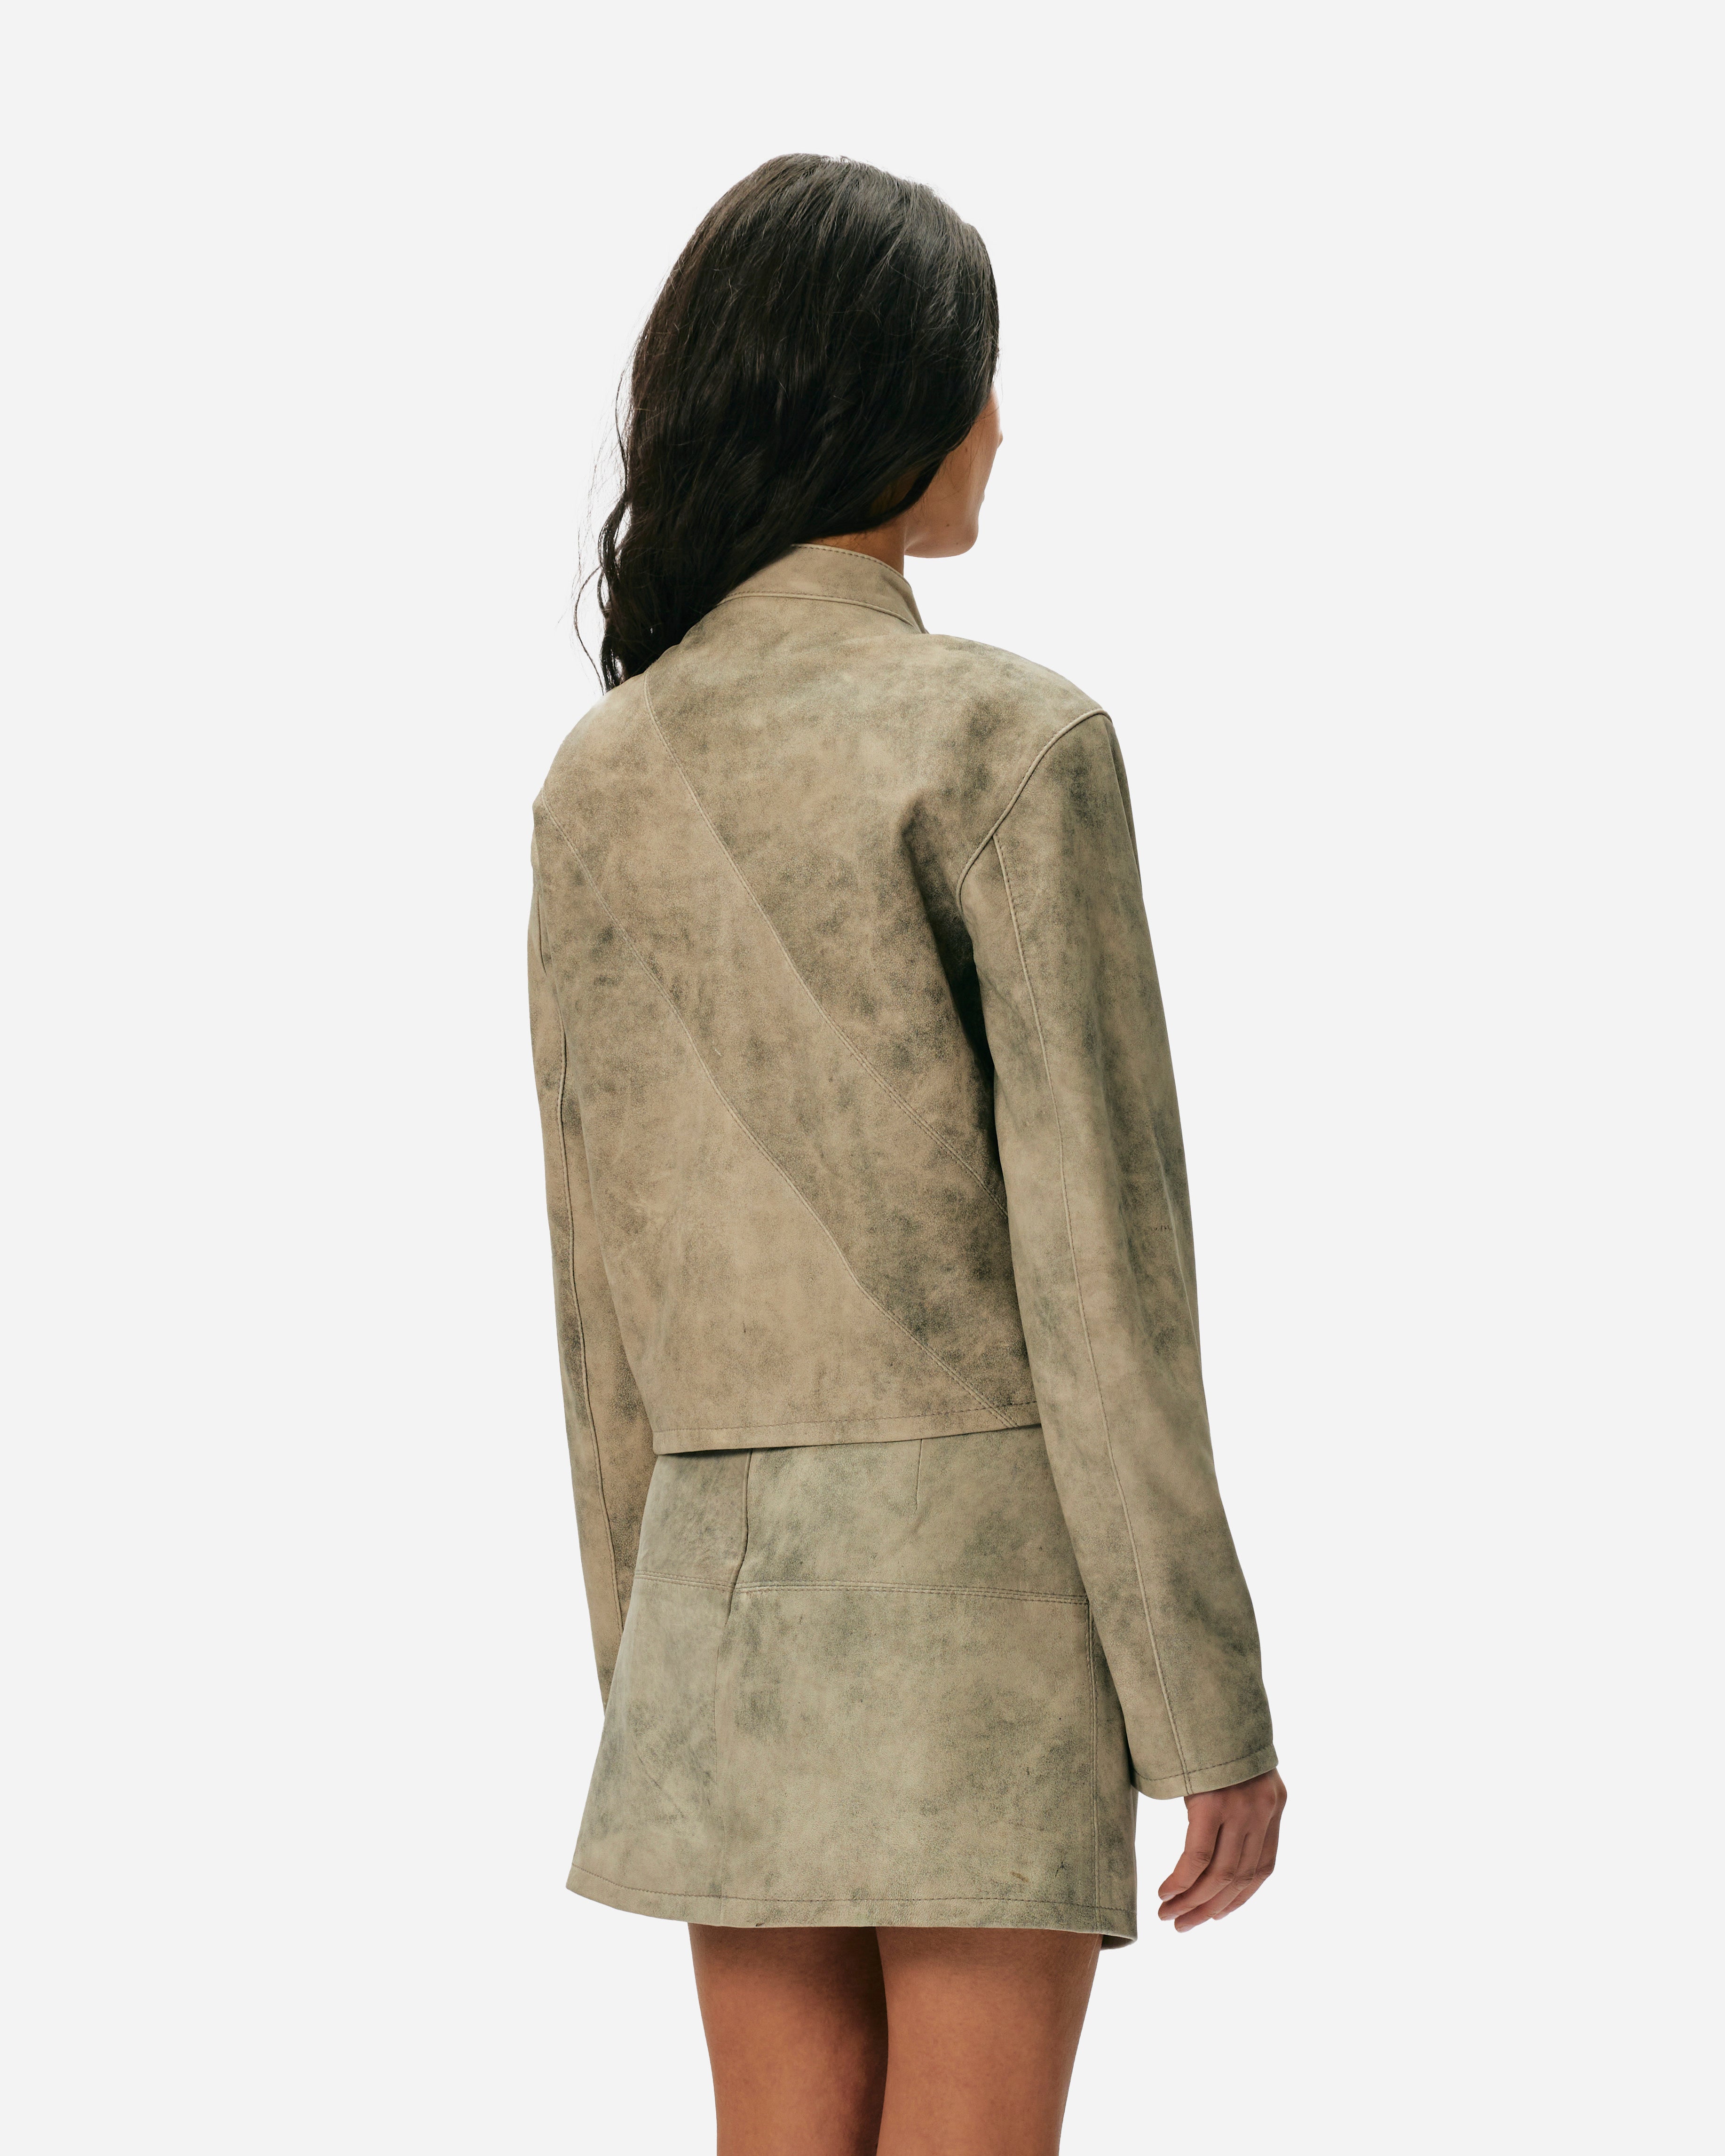 Oval Square Beat Leather Jacket Grey Stone  20699-7006